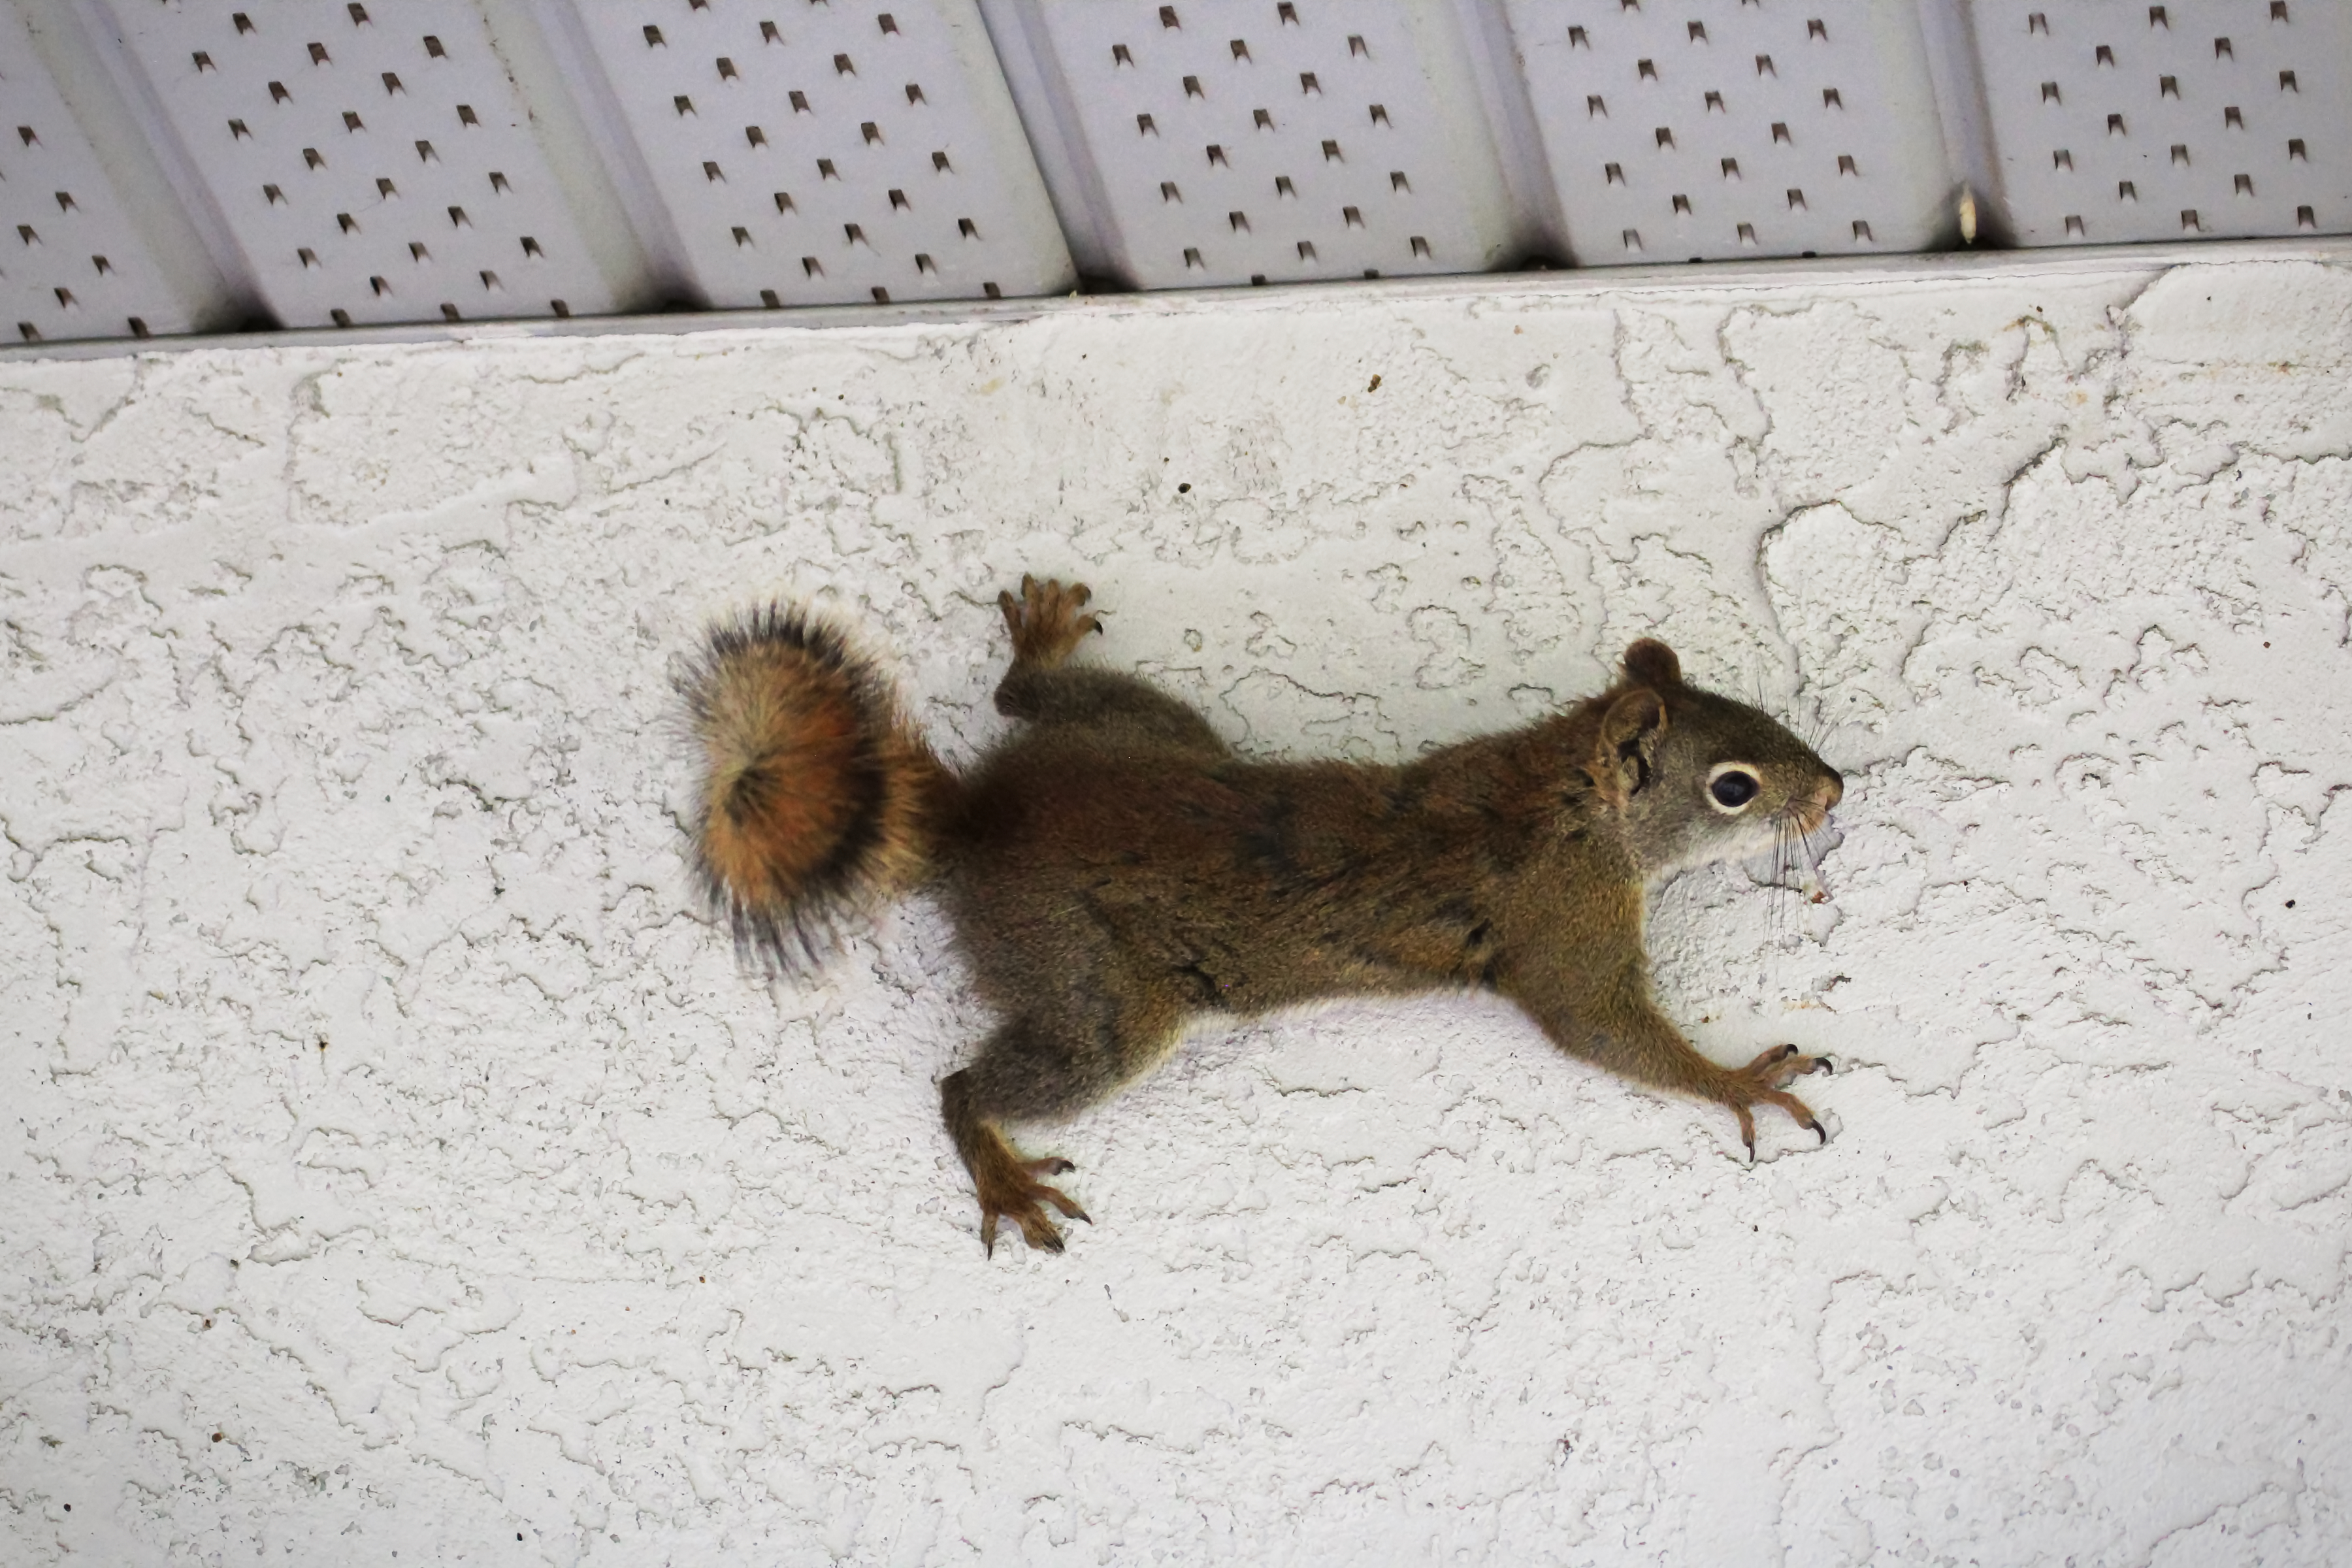 Squirrel removal Minneapolis - Squirrel in the attic - Get rid of squirrels